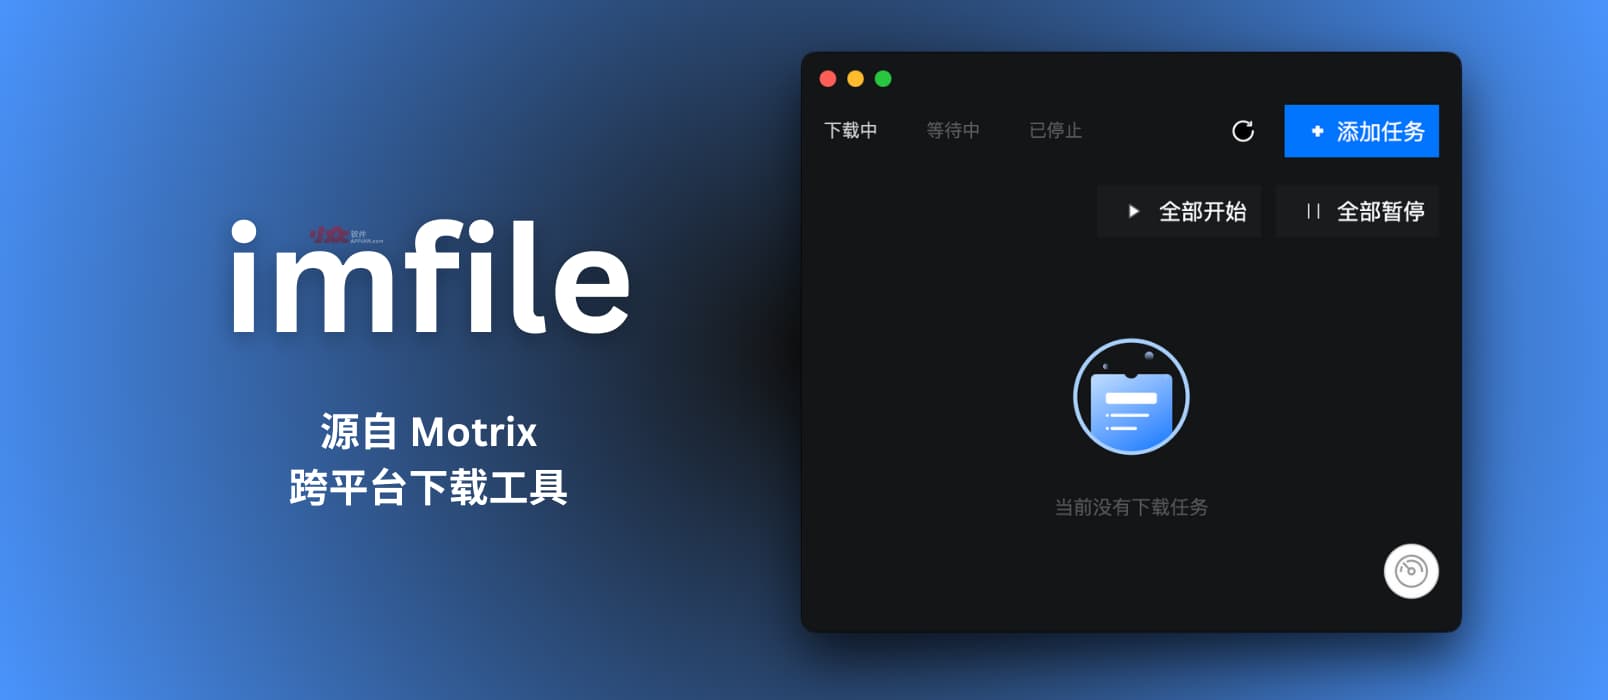 imfile -  源自 Motrix，跨平台下载工具，支持 HTTP、BT、磁力